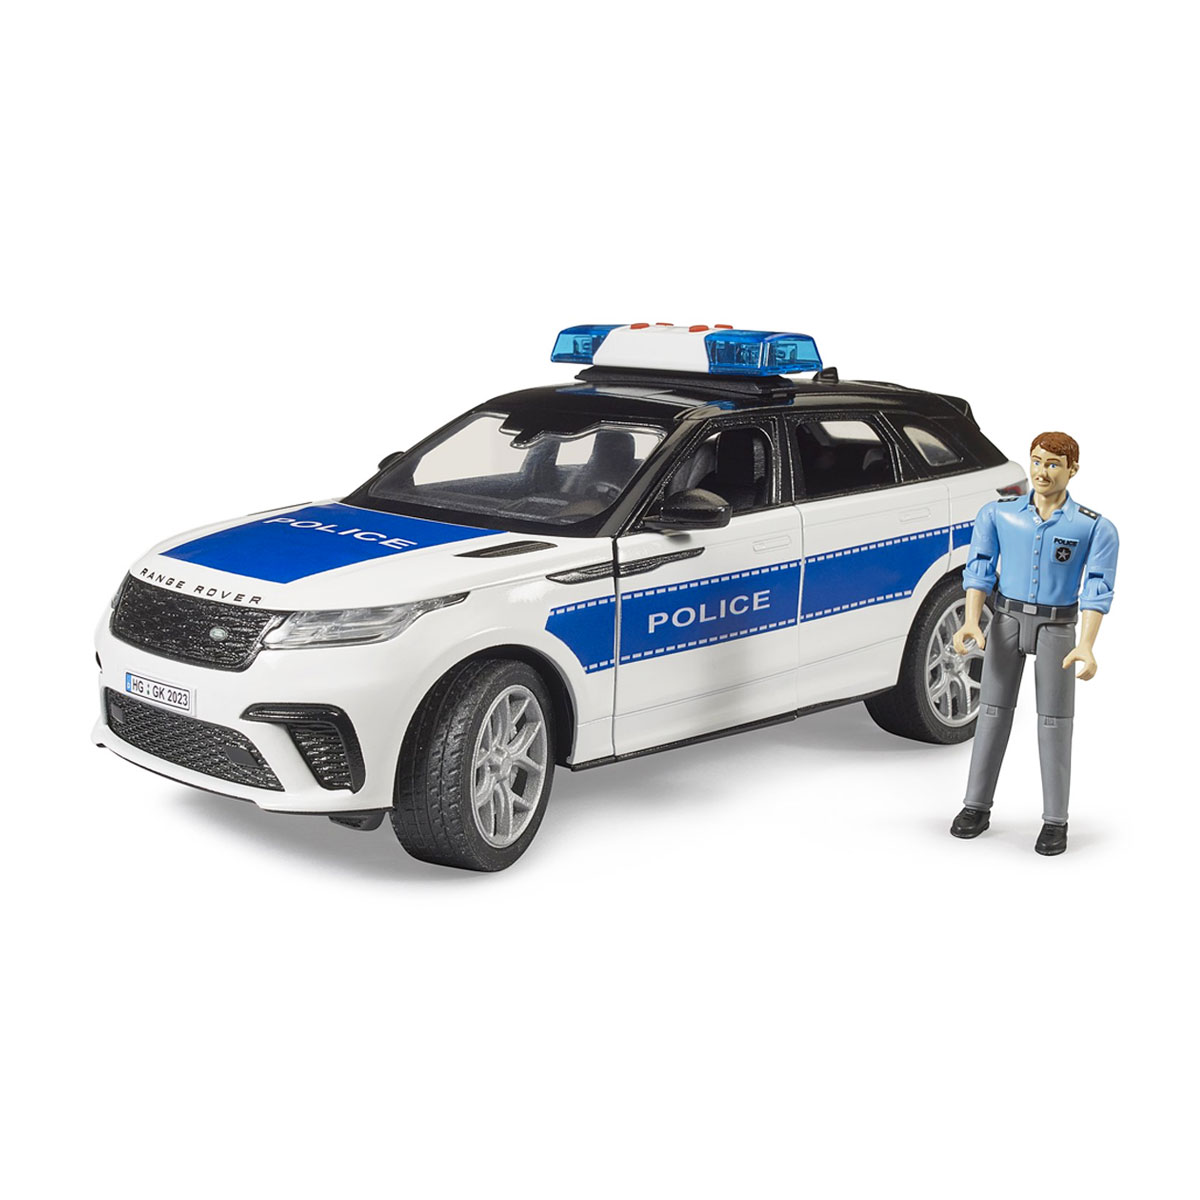 Coche de Policía Range Rover Velar – Ref. Bruder 2890